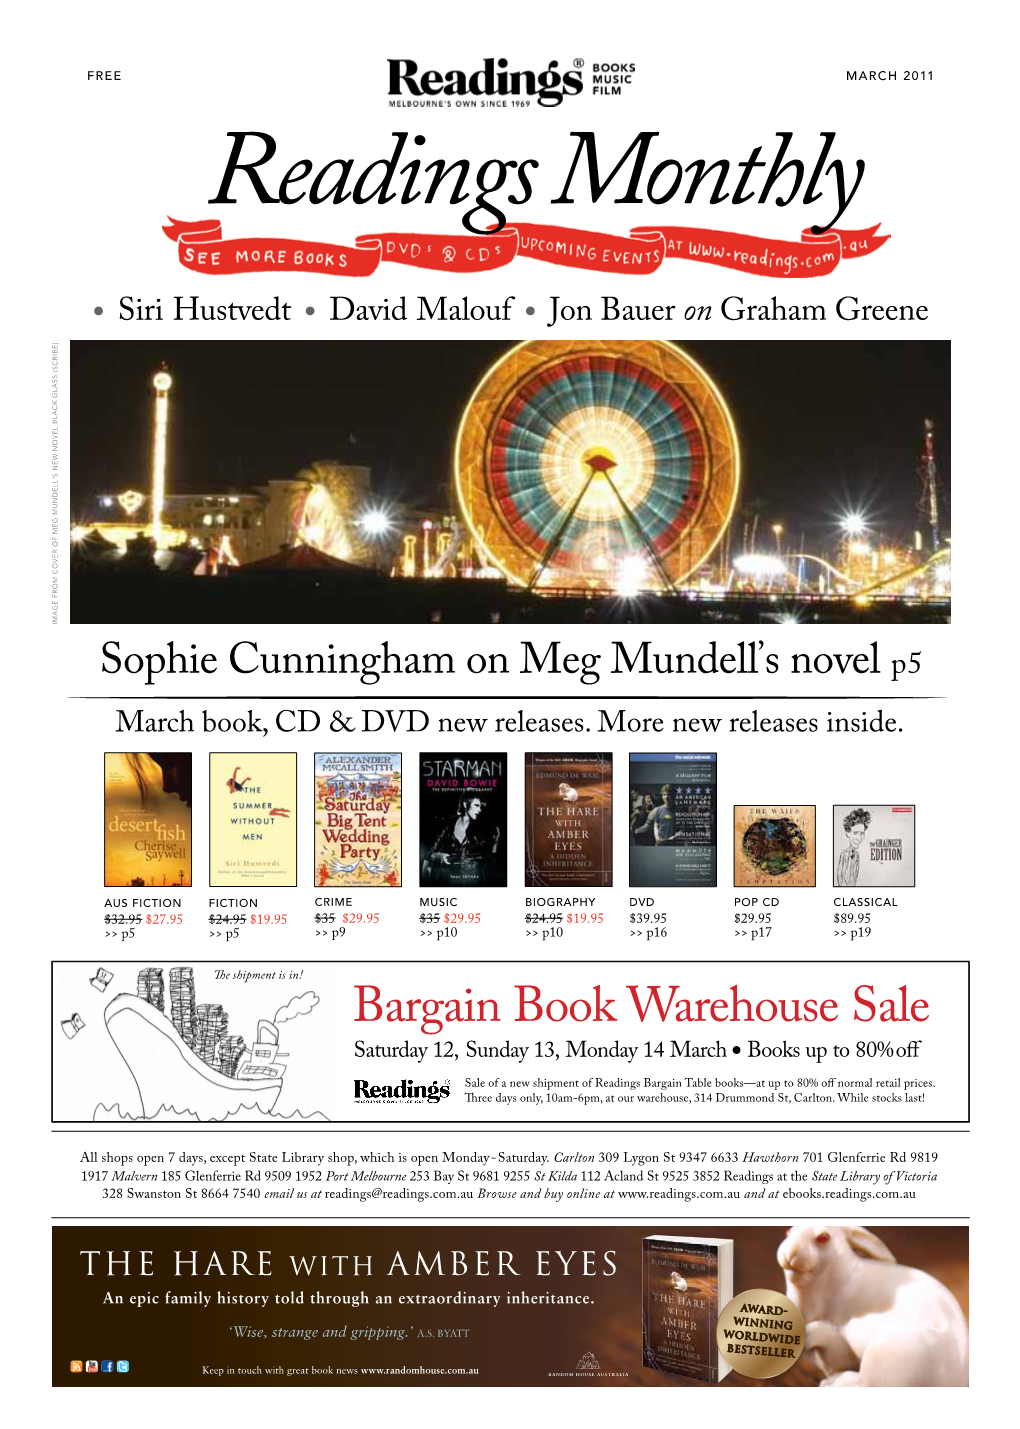 Bargain Book Warehouse Sale